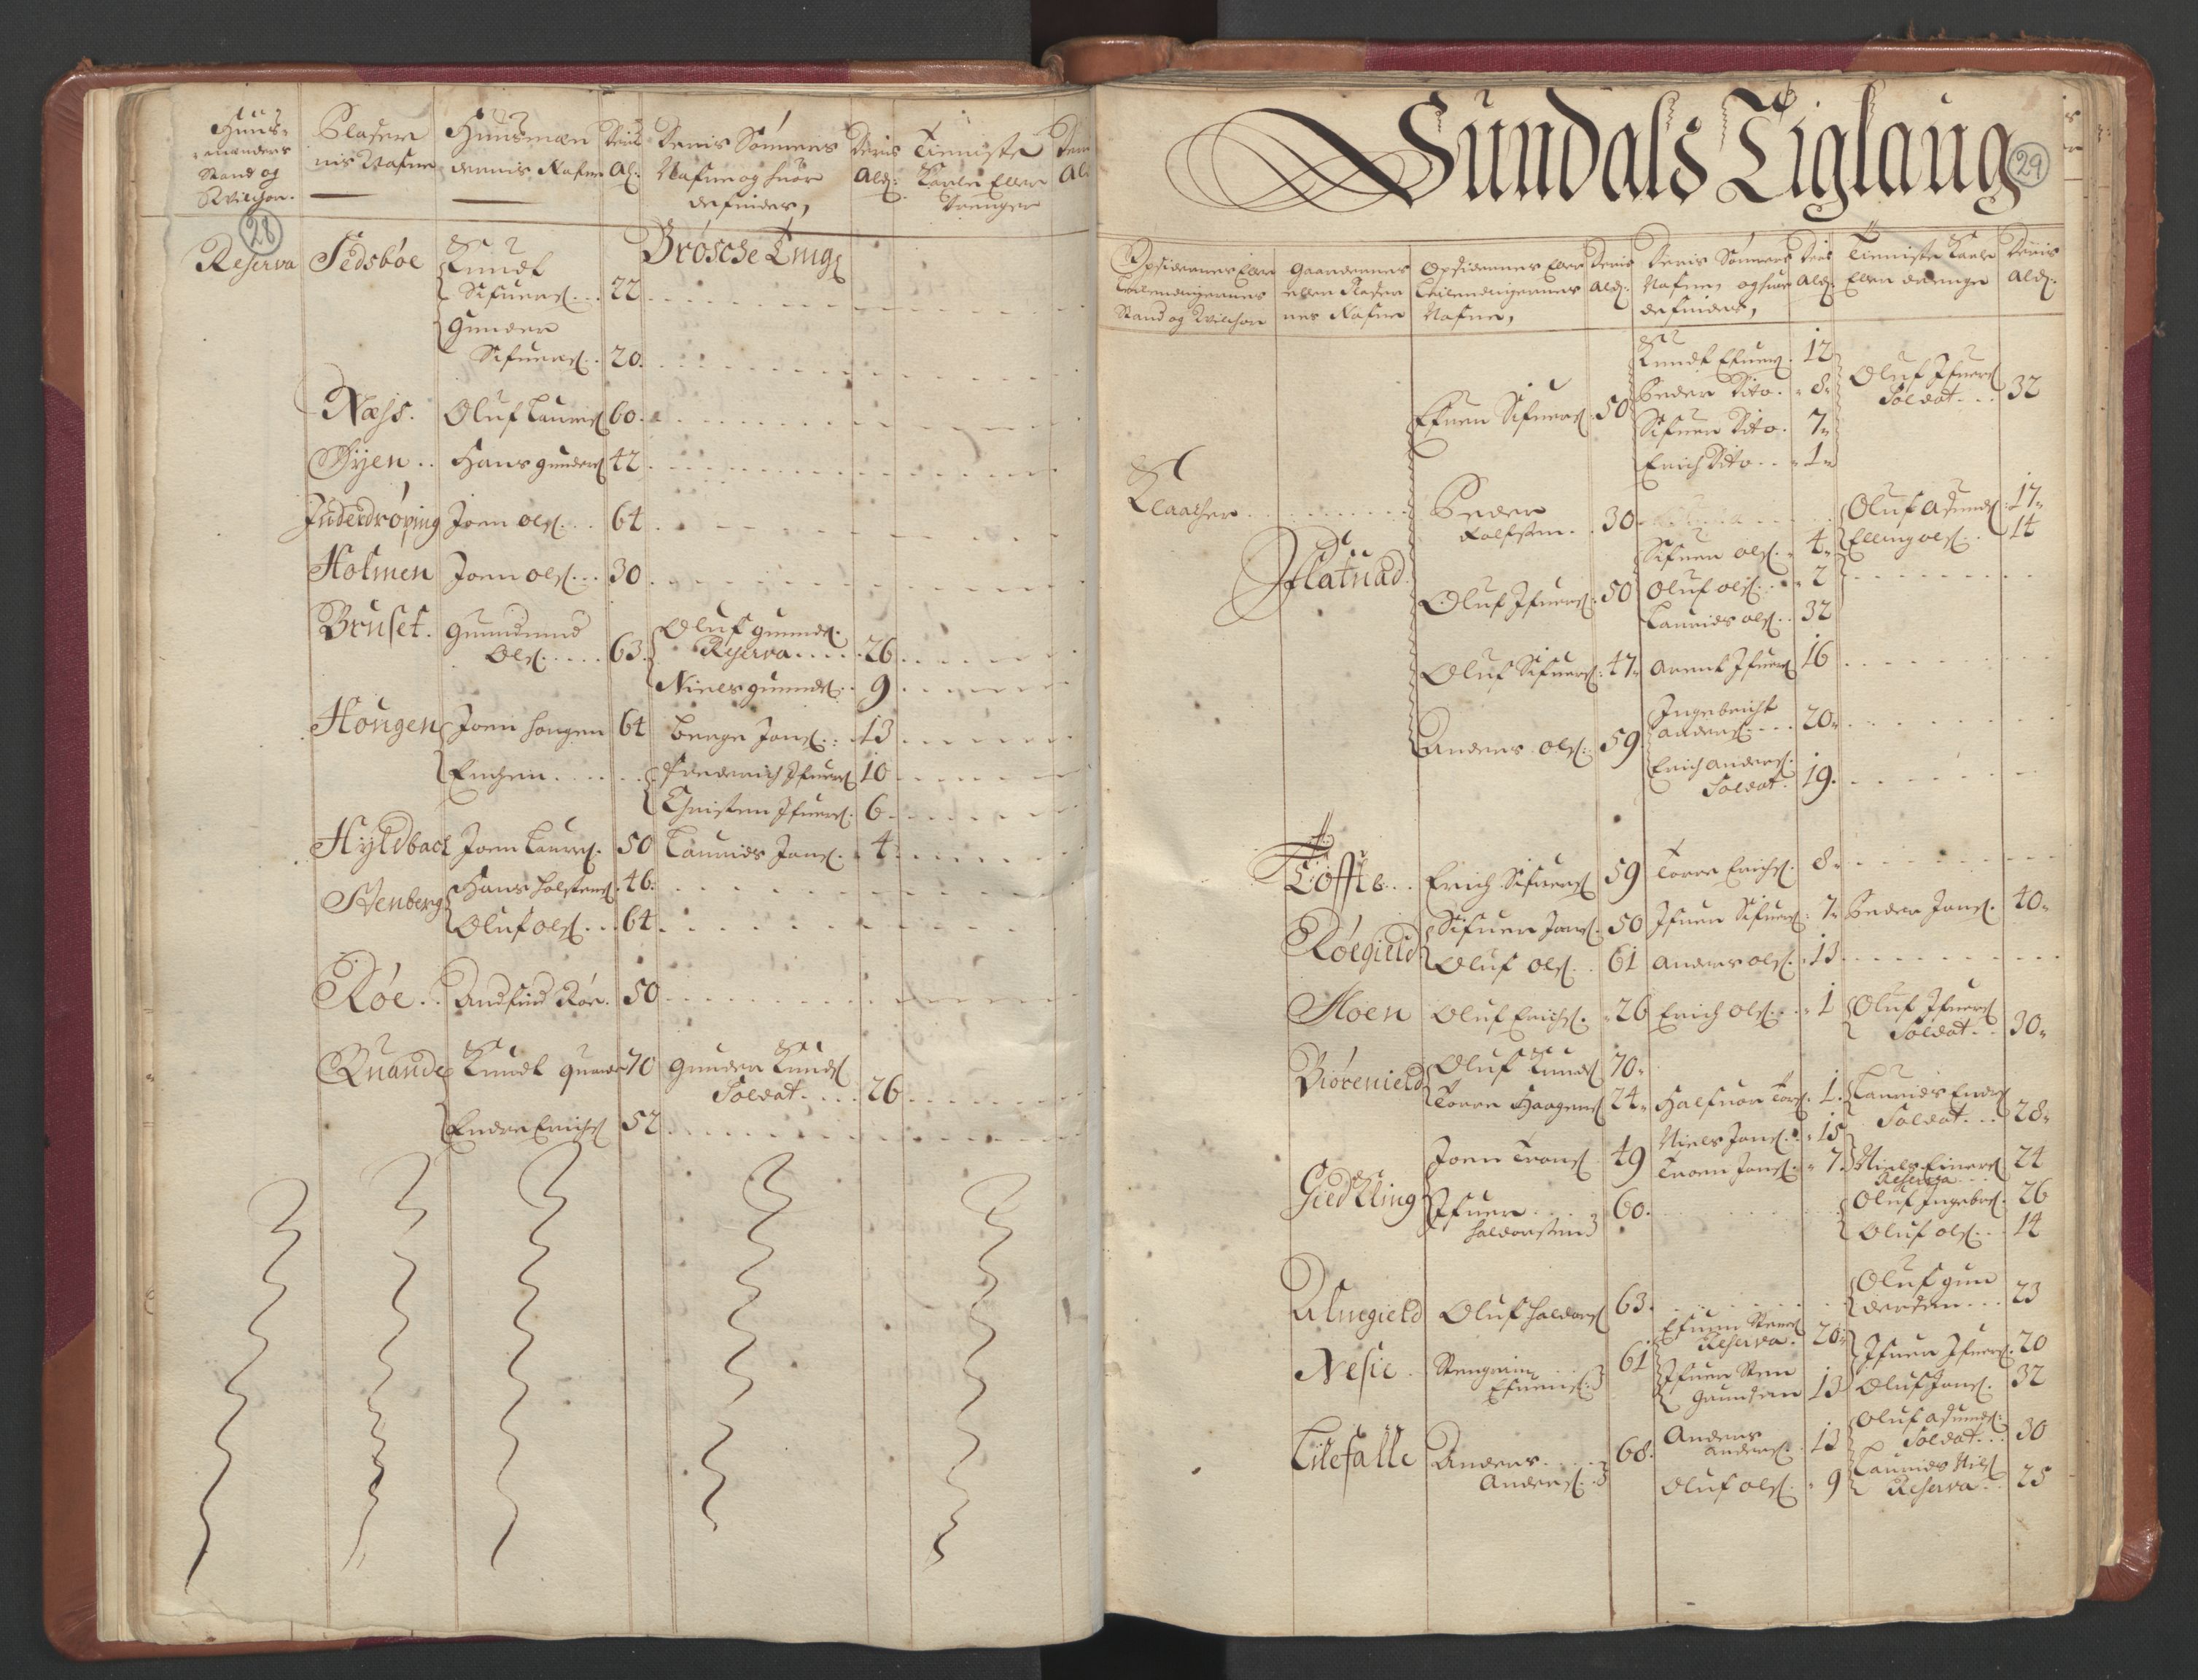 RA, Census (manntall) 1701, no. 11: Nordmøre fogderi and Romsdal fogderi, 1701, p. 28-29